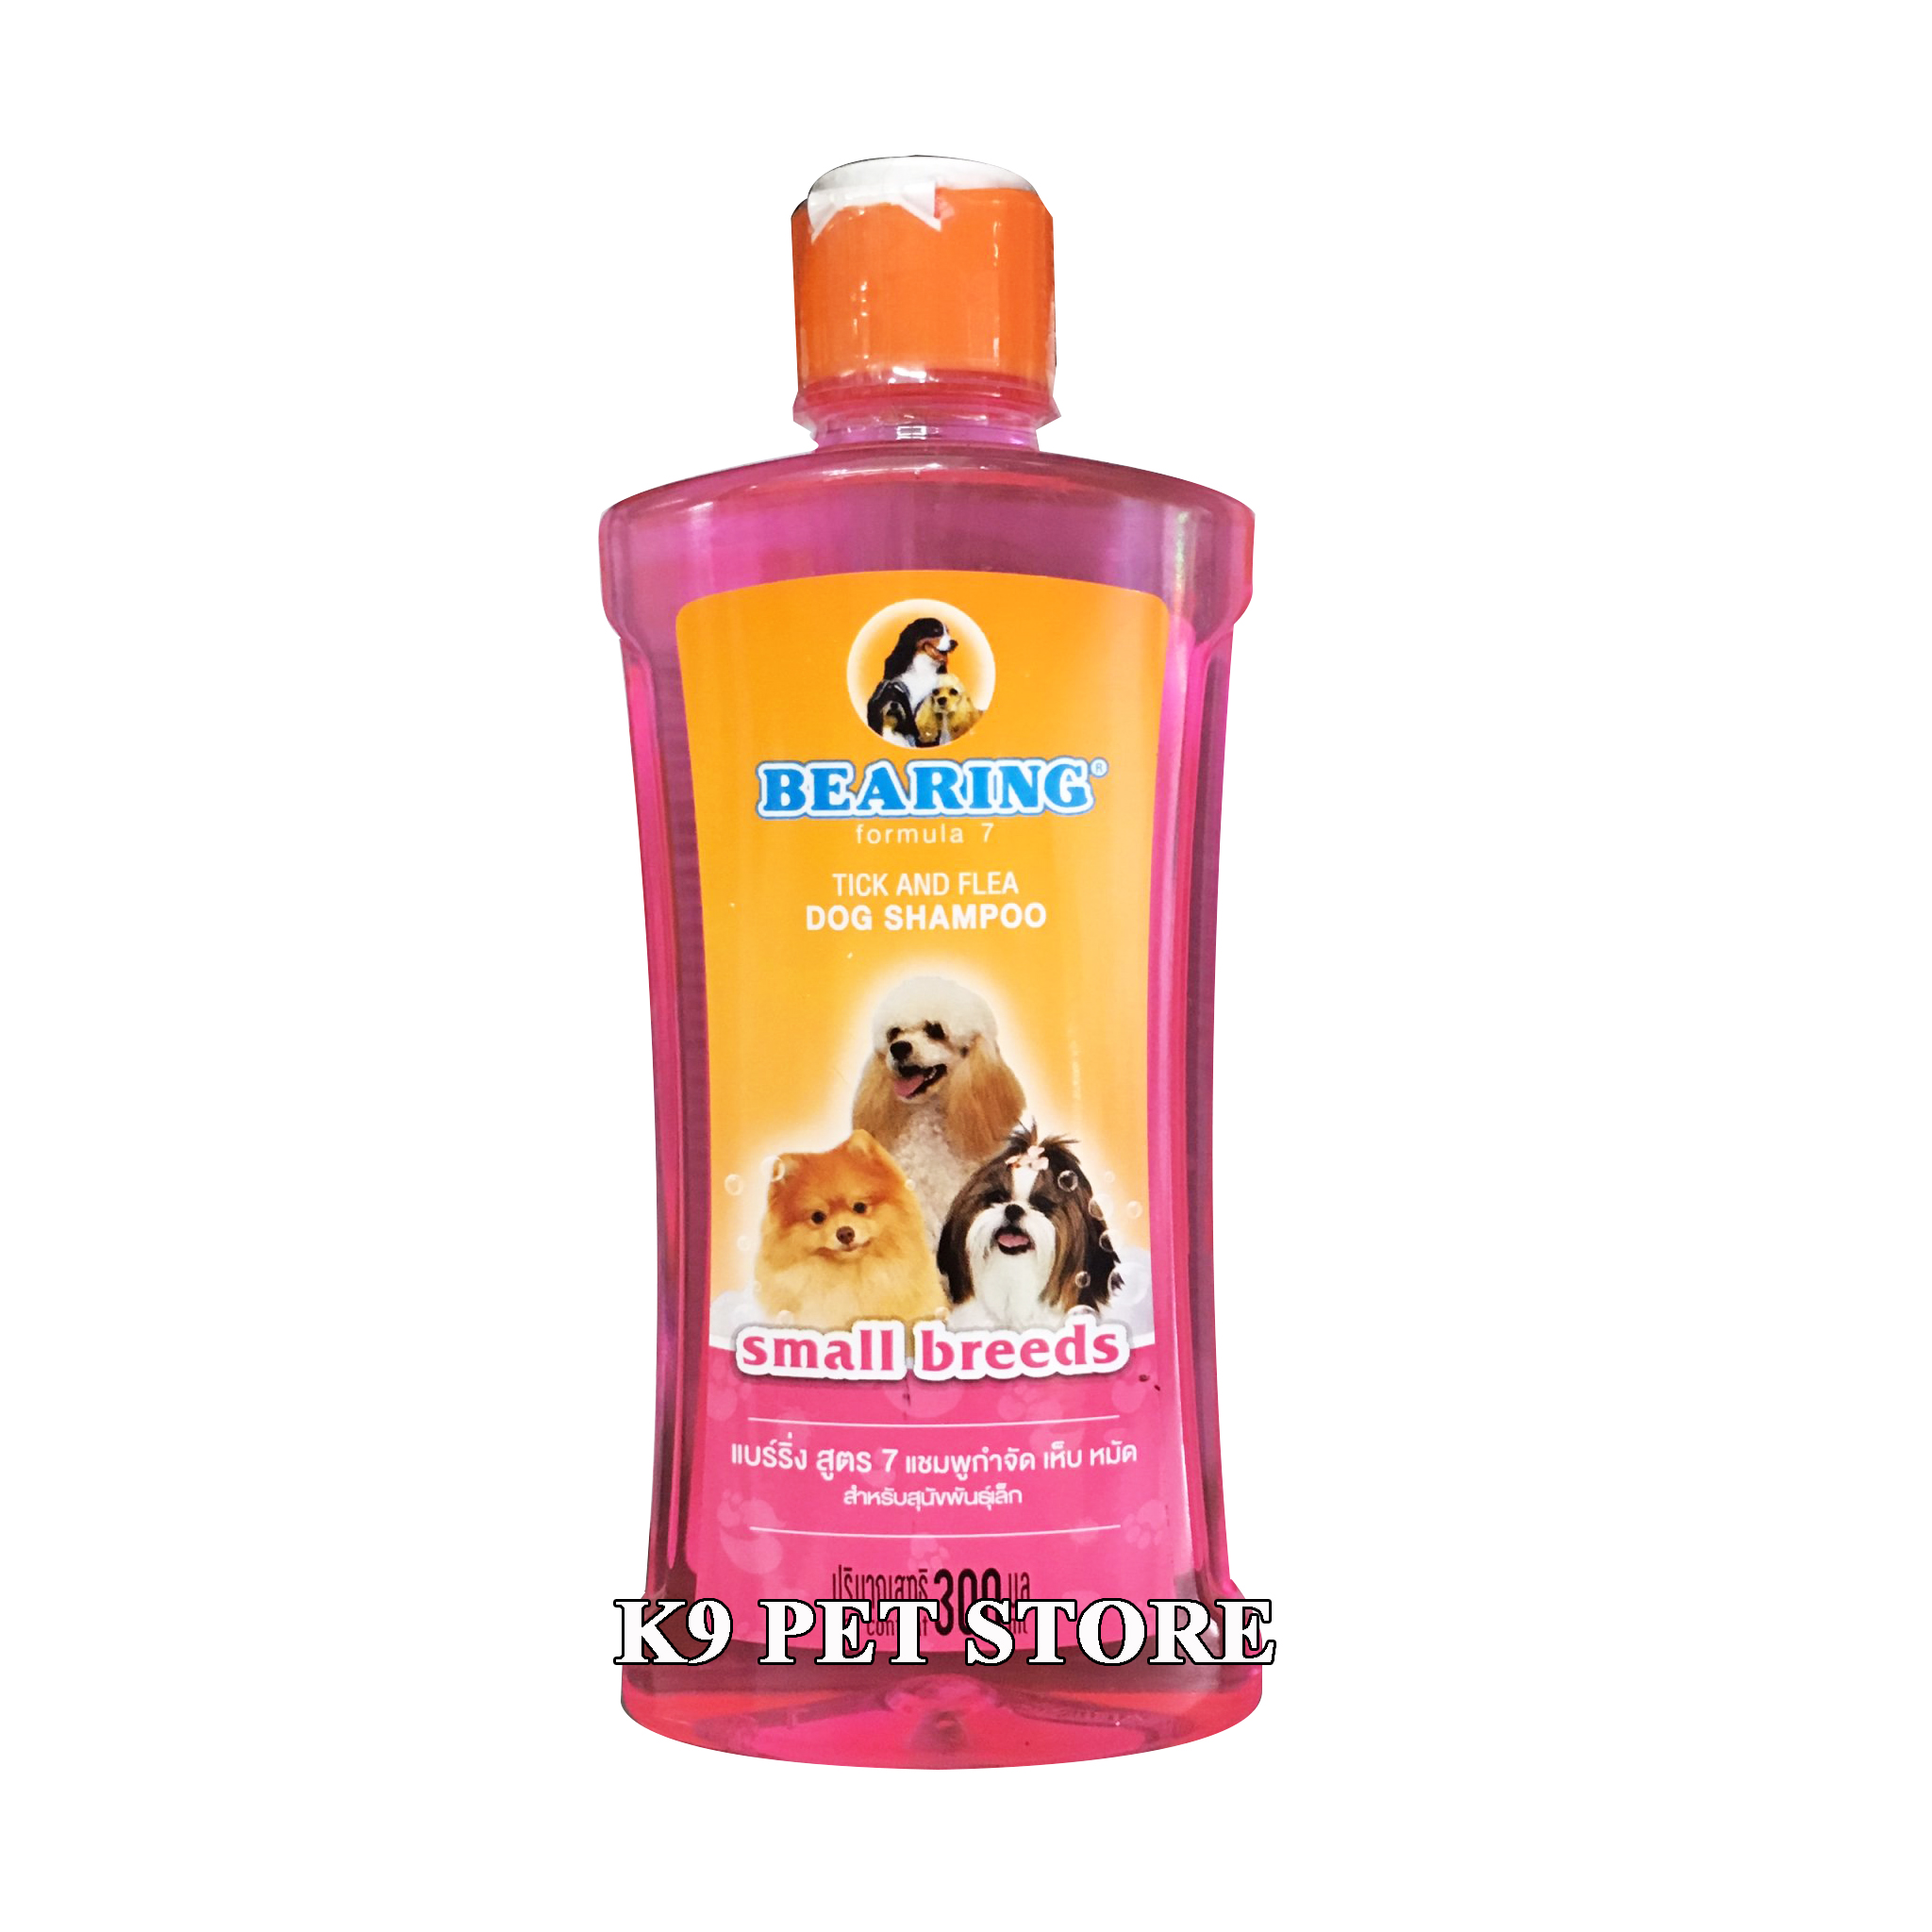 Sữa tắm trị ve Bearing Tick & Flea Dog Shampoo cho chó nhỏ 300ml